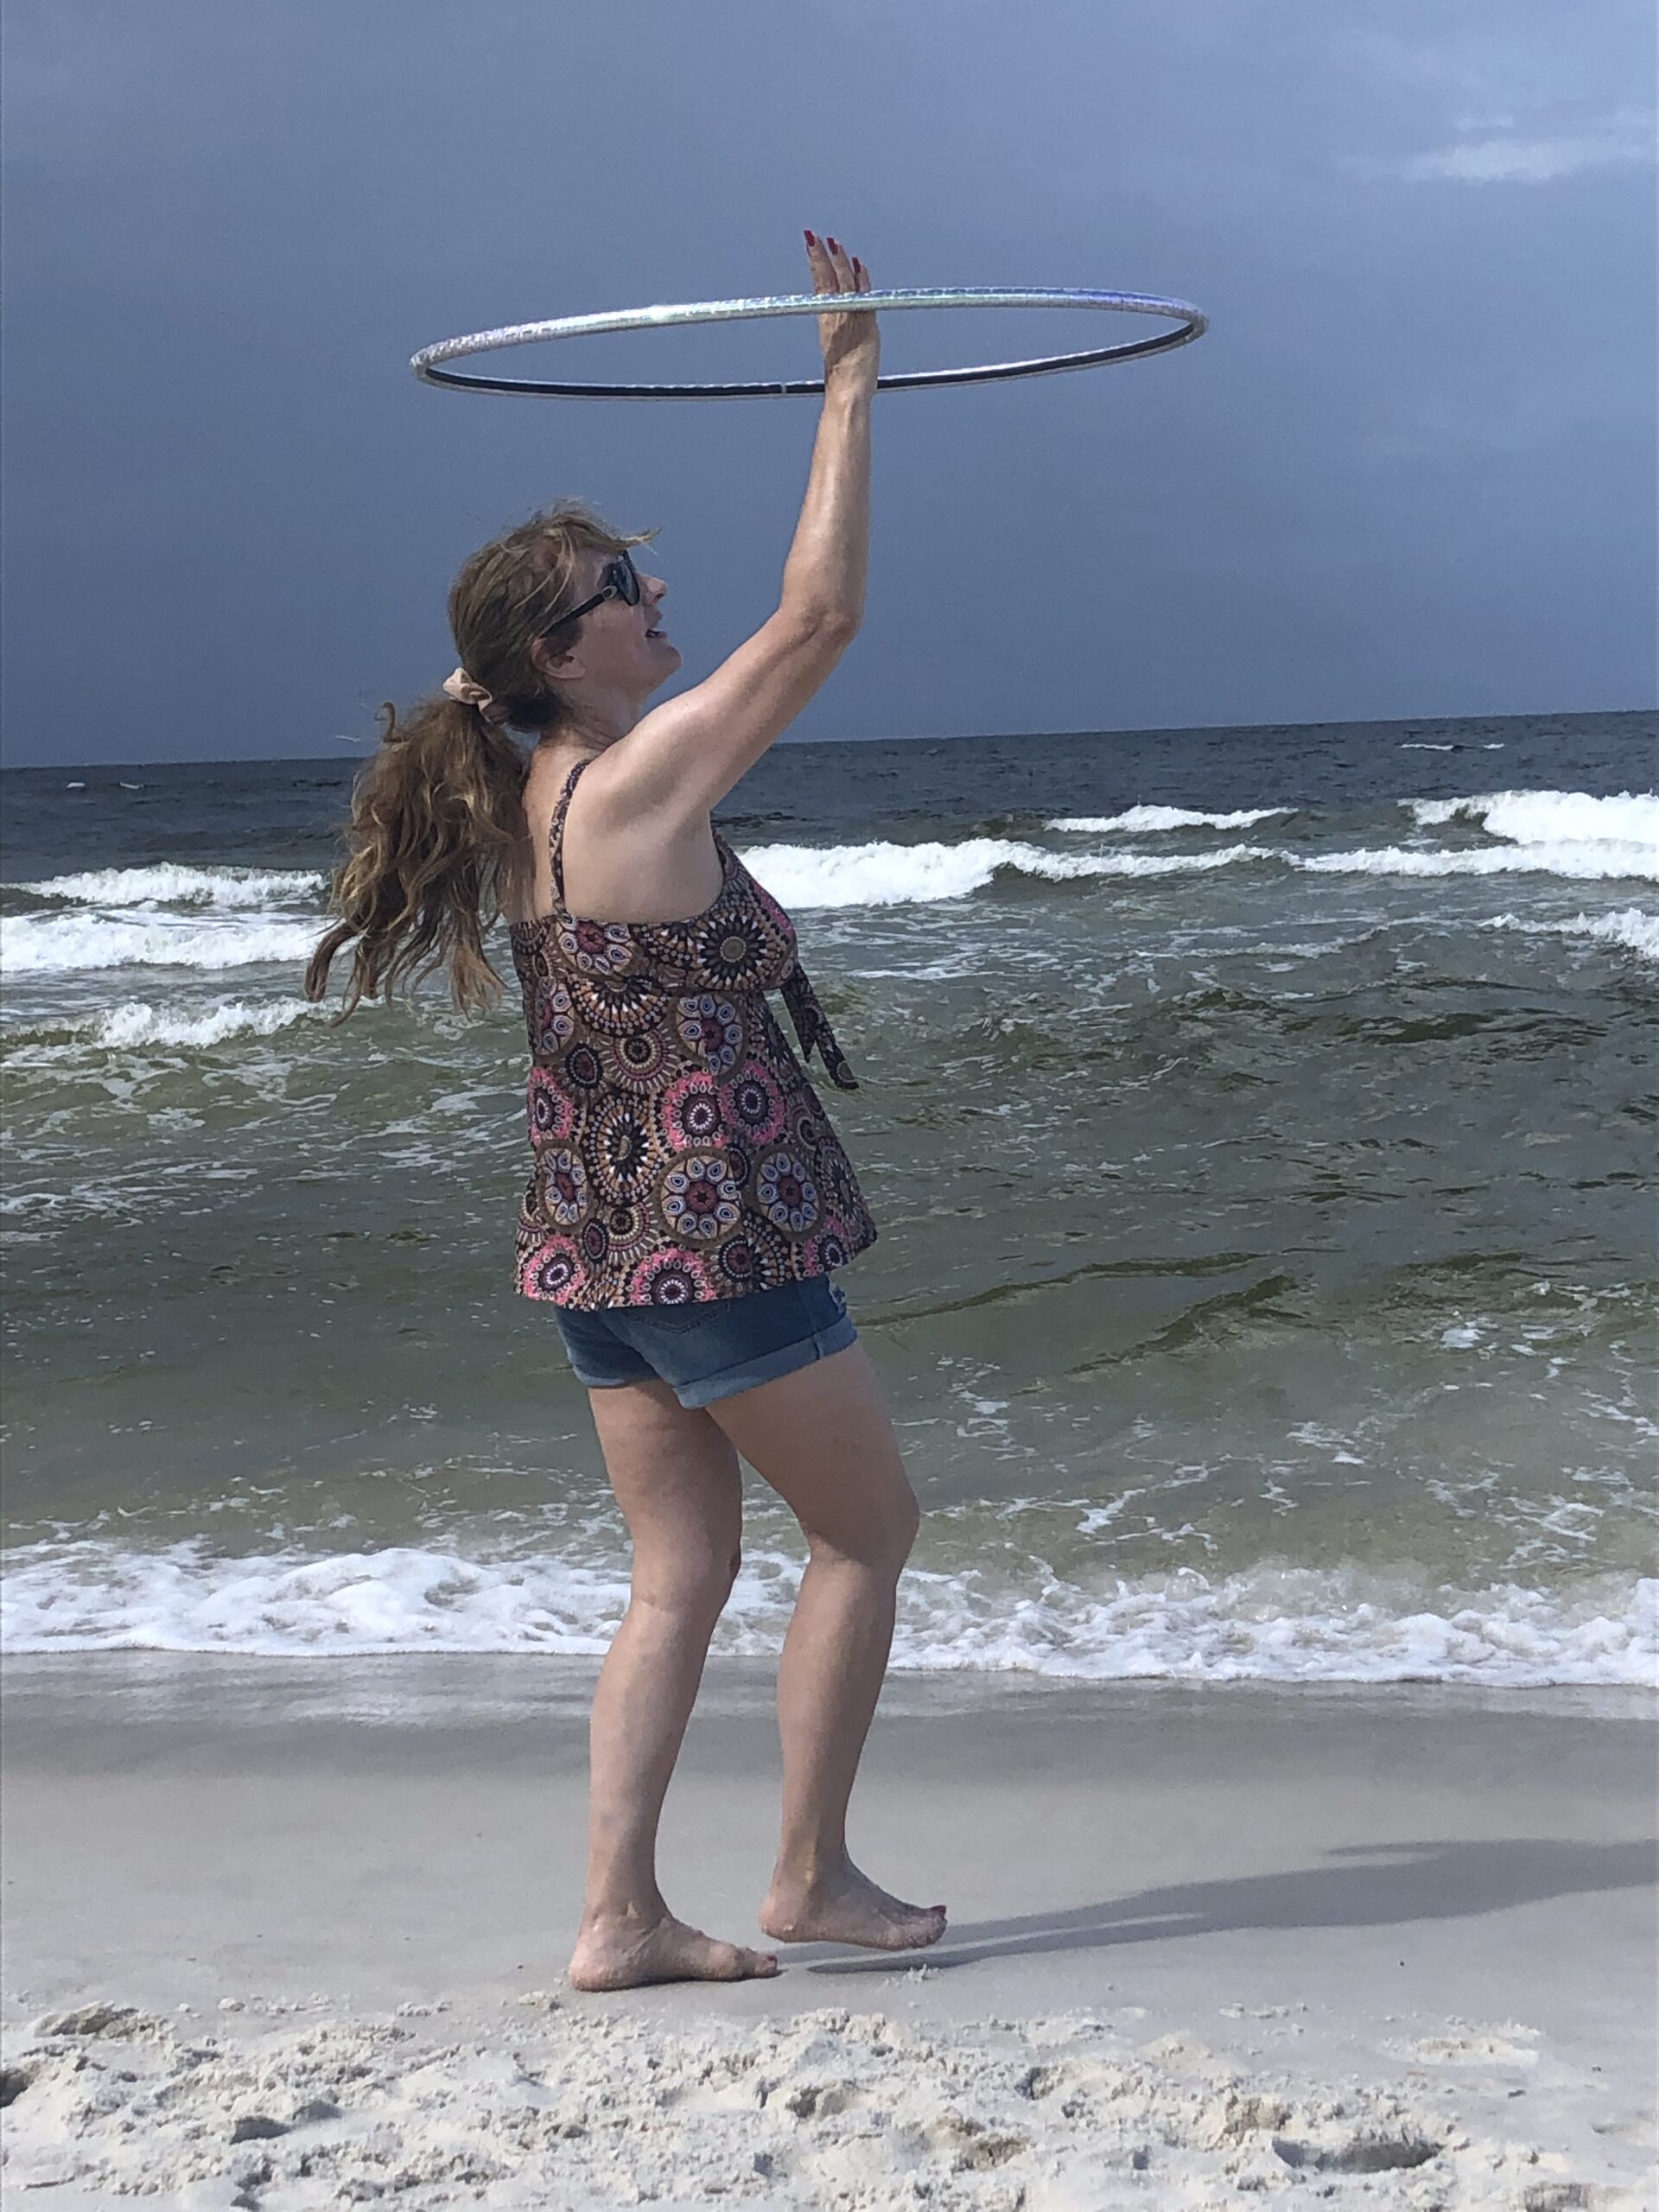 Woman spinning hula hoop on sandy beach